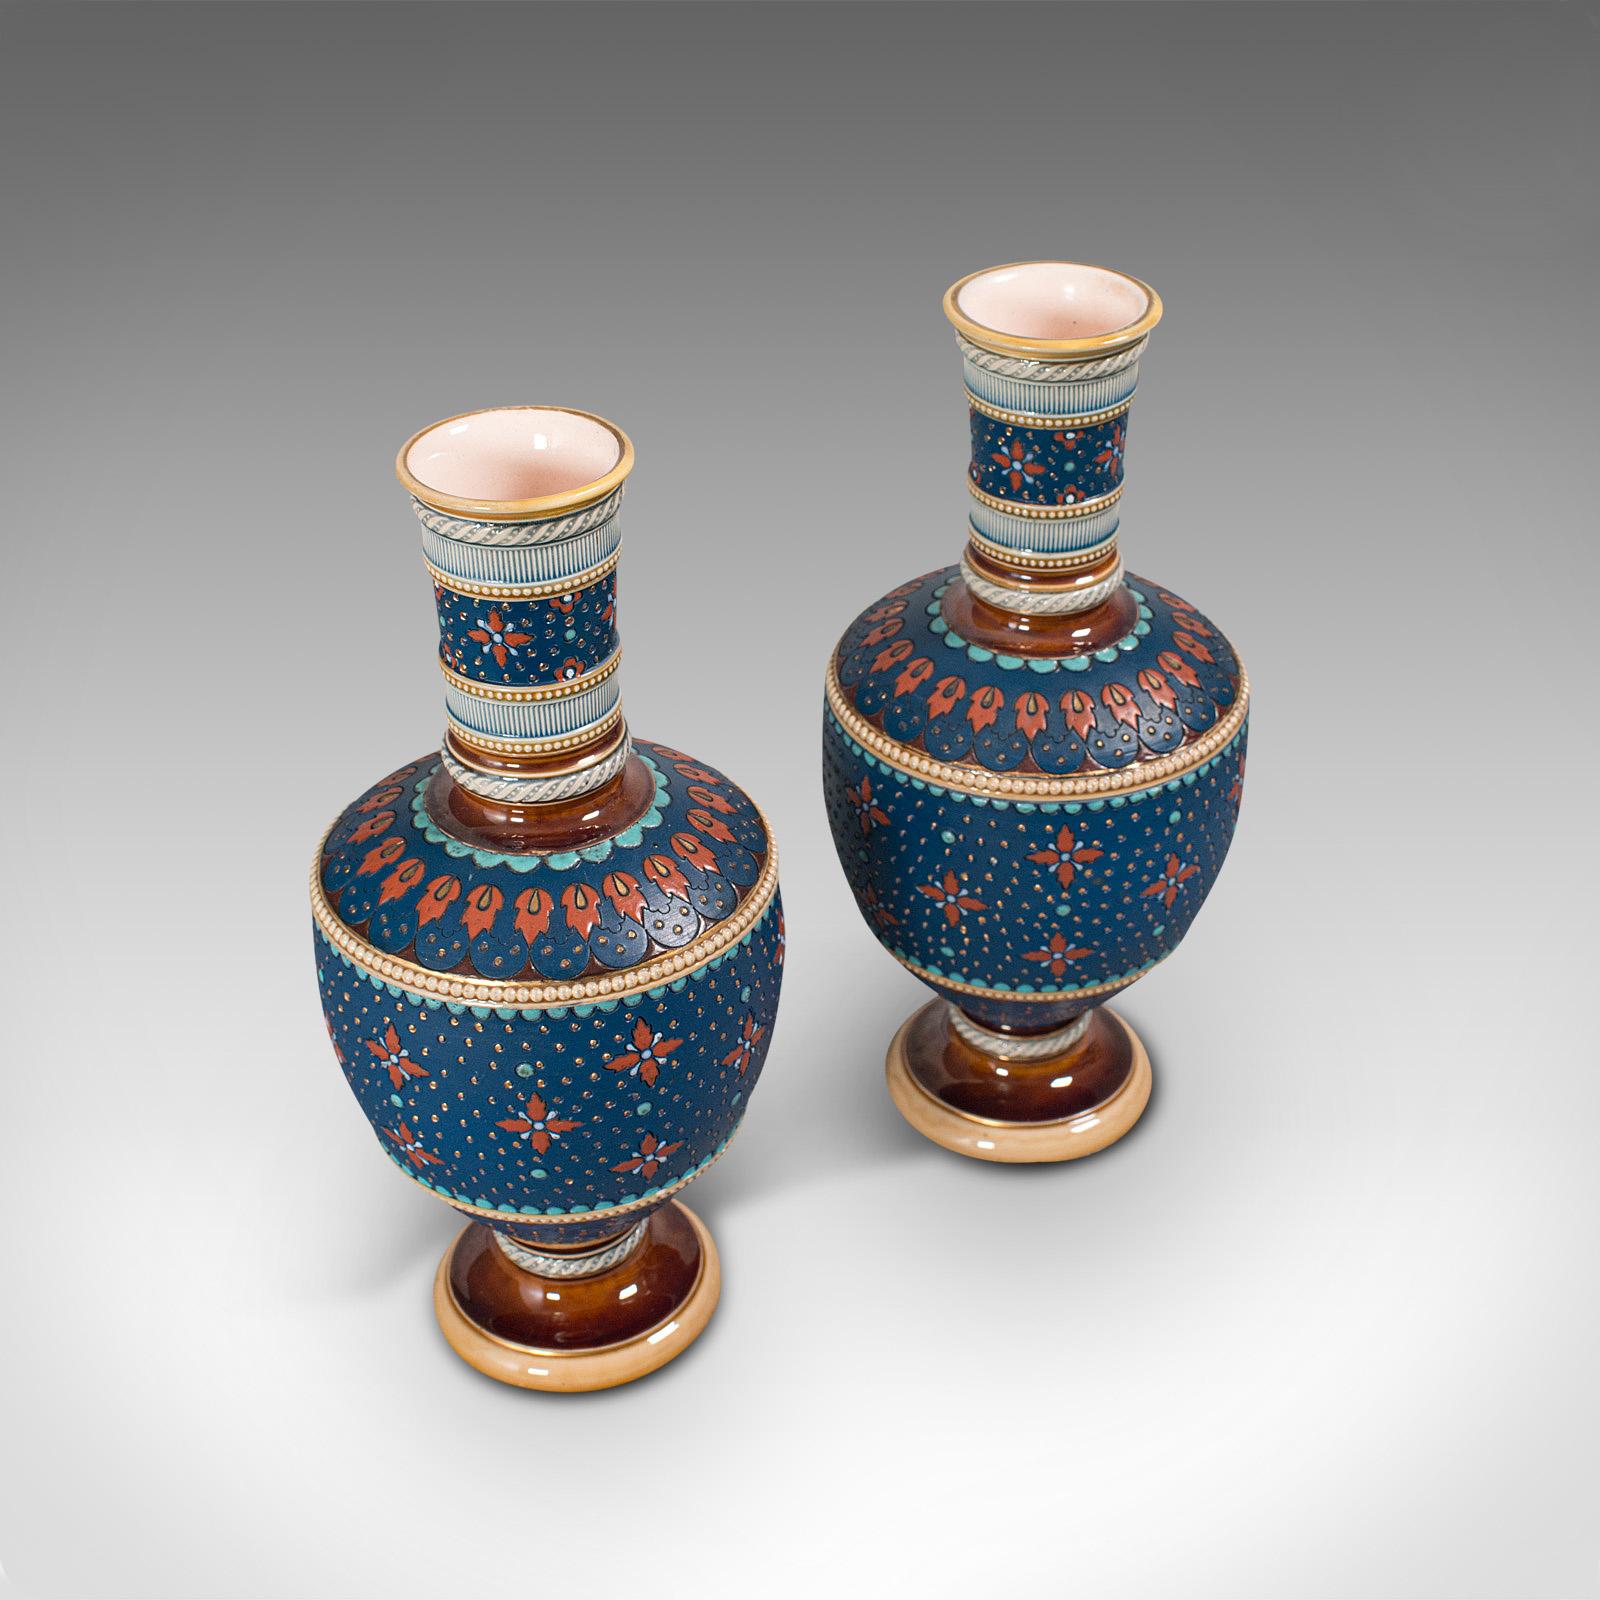 Pair of Antique Decorative Vases, German, Ceramic, Villeroy & Boch, Victorian 1